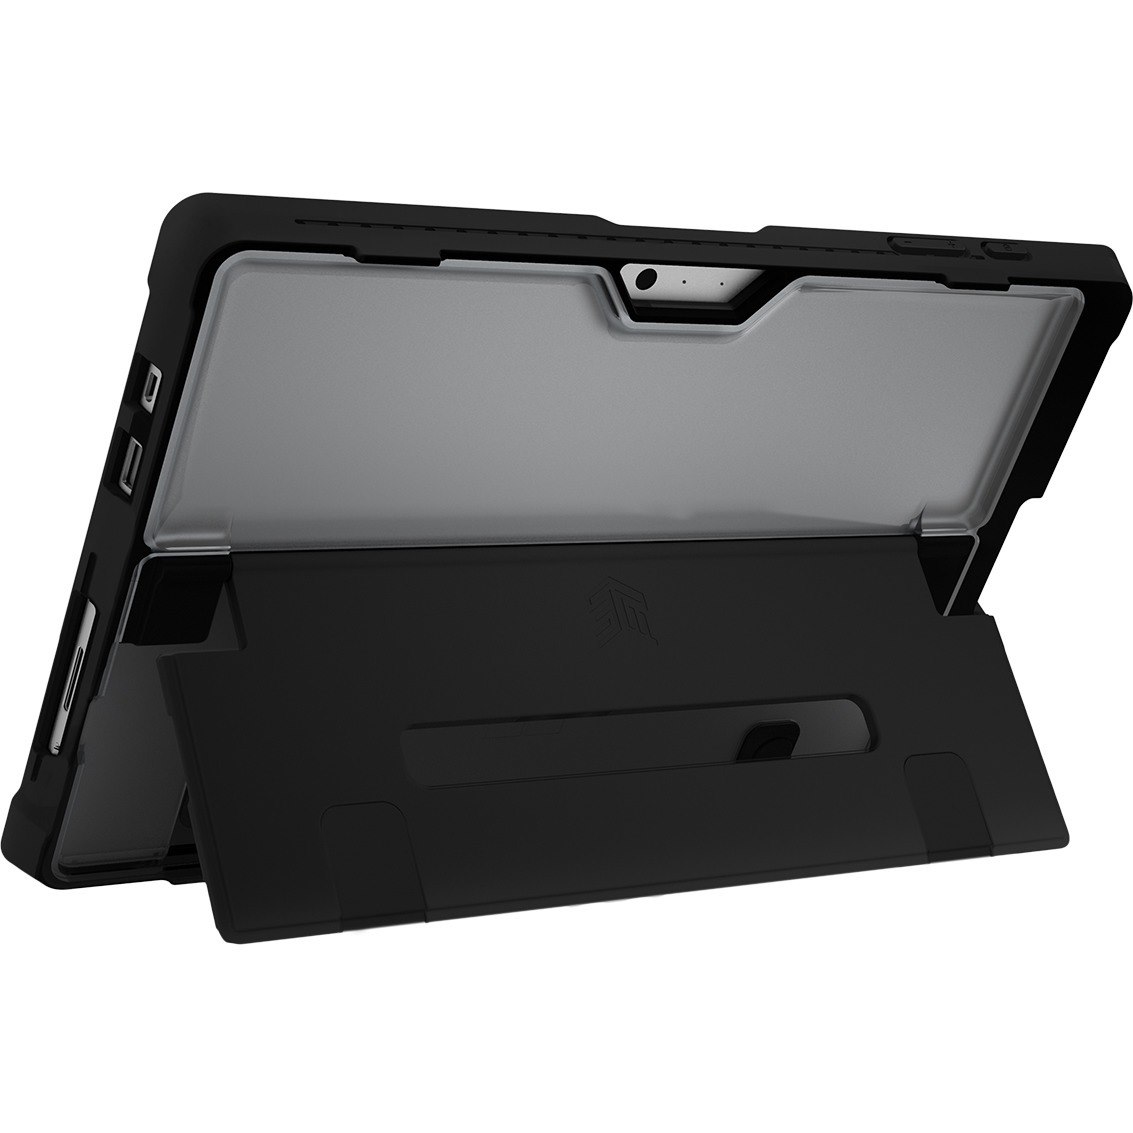 STM Goods Dux Shell Case for Microsoft Surface Pro 7, Surface Pro 6, Surface Pro (5th Gen), Surface Pro 4 Tablet - Textured - Black, Transparent